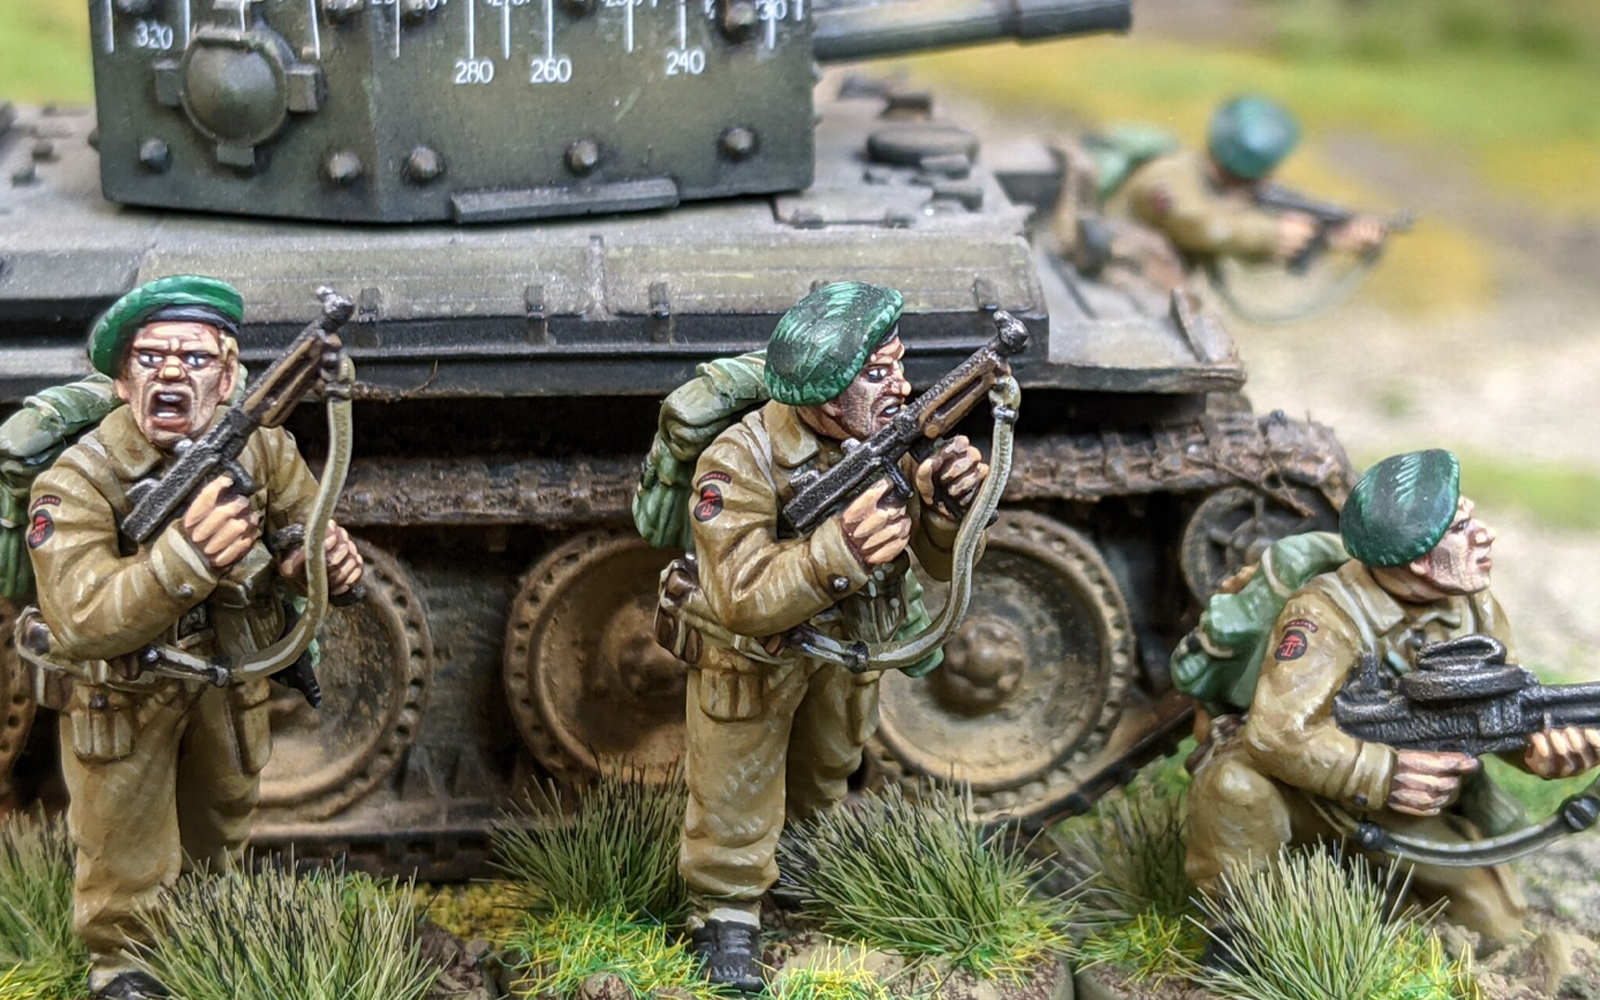 Commando: Command Squad   - Miniatures Collectors Guide